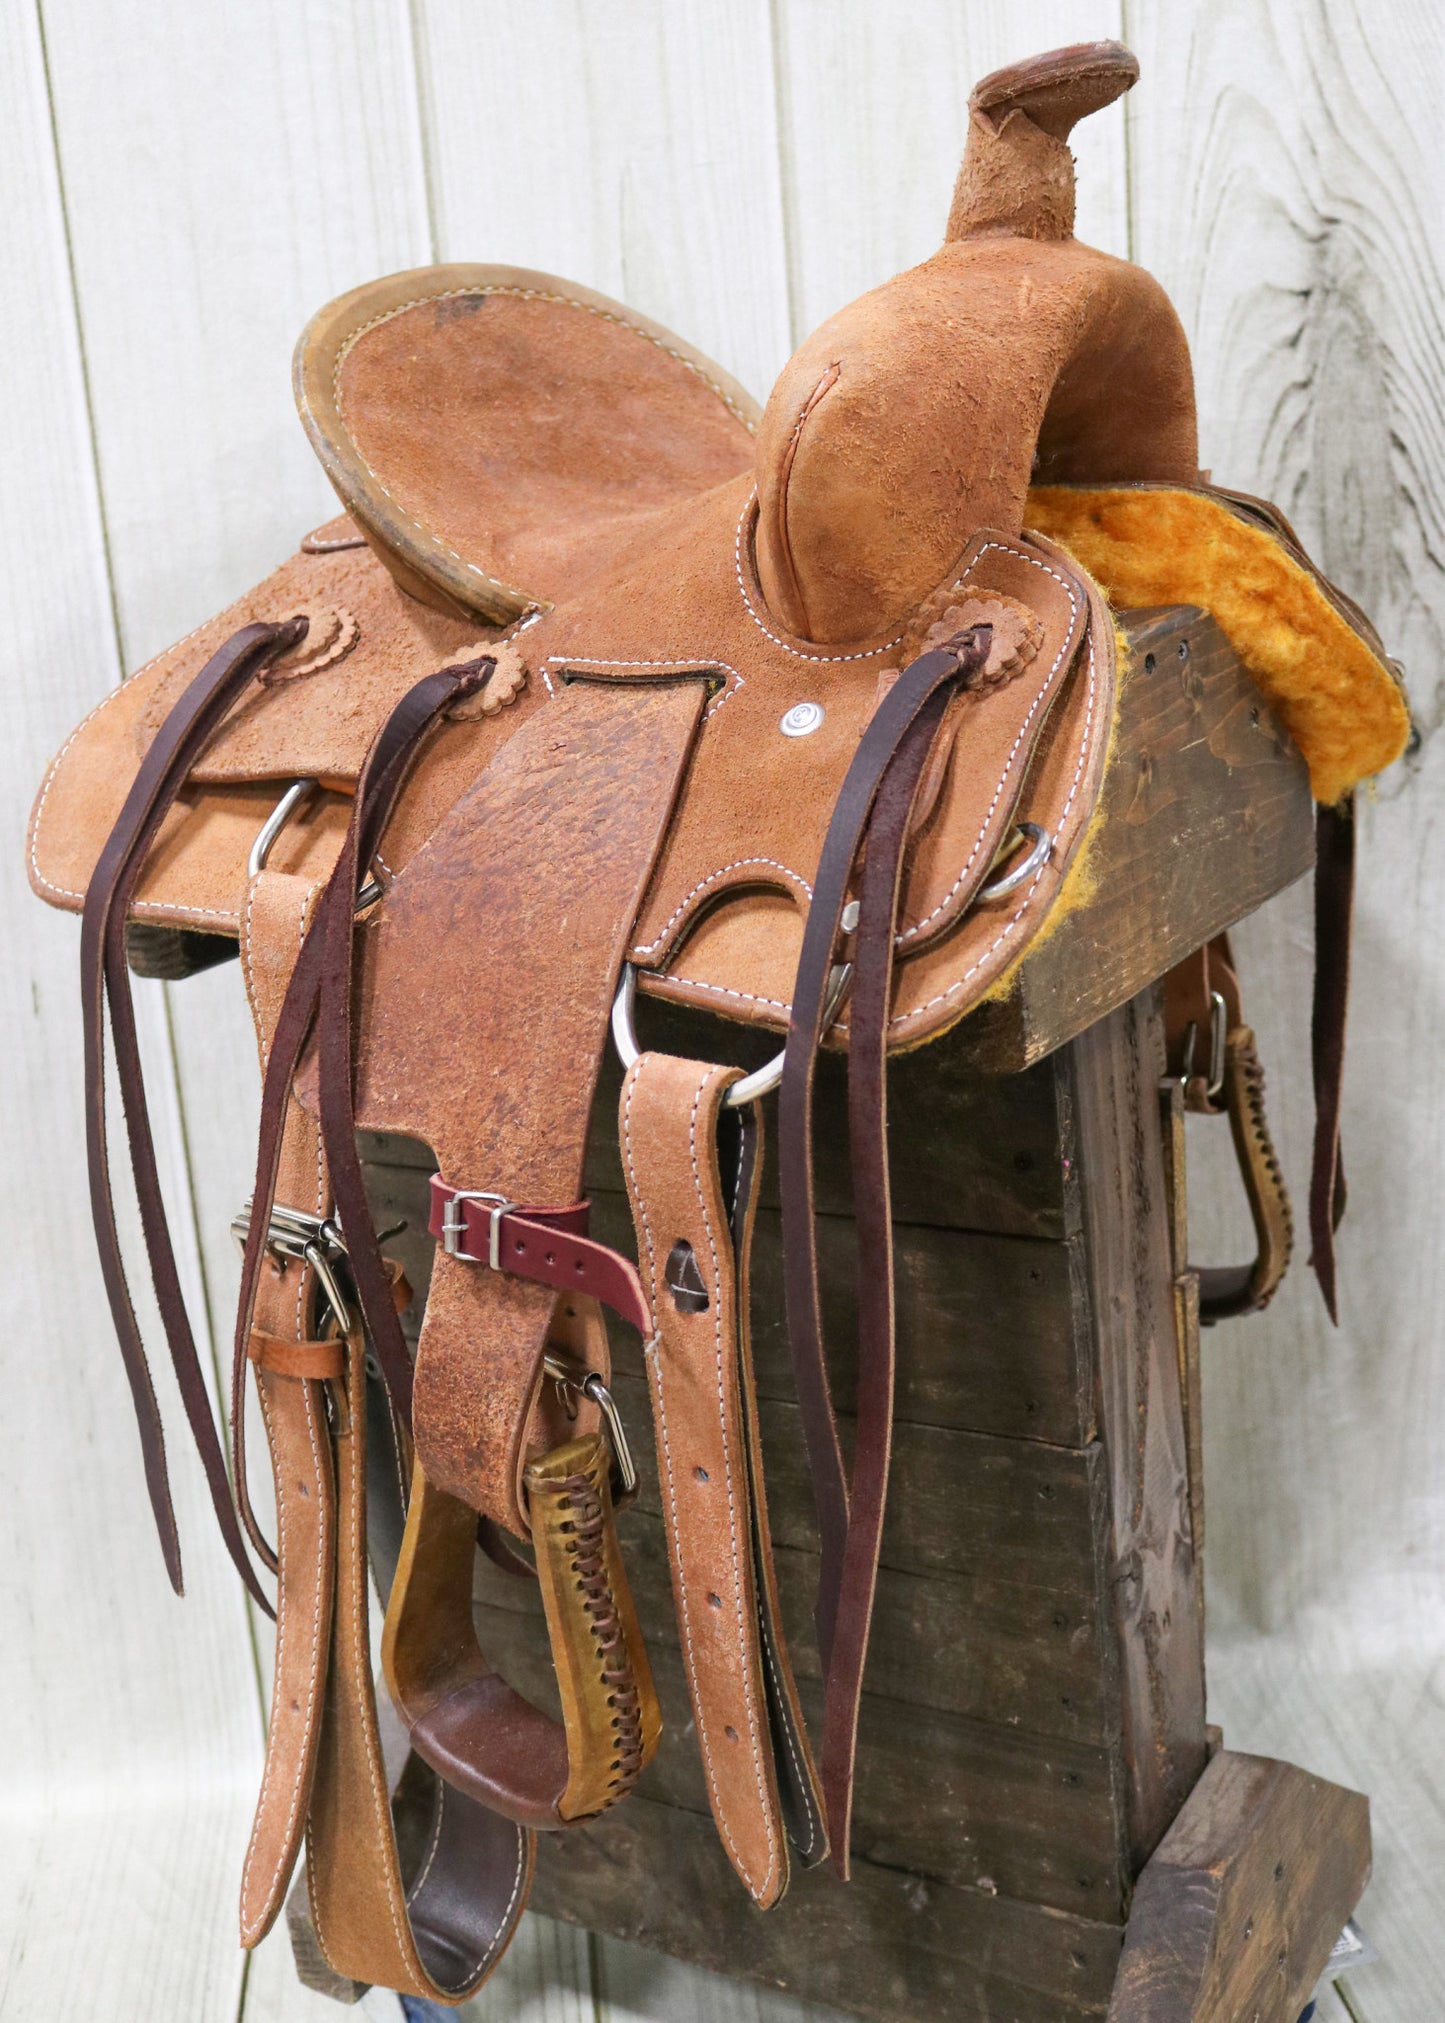 10" Kids Roughout Leather High Back Pony Western Saddle